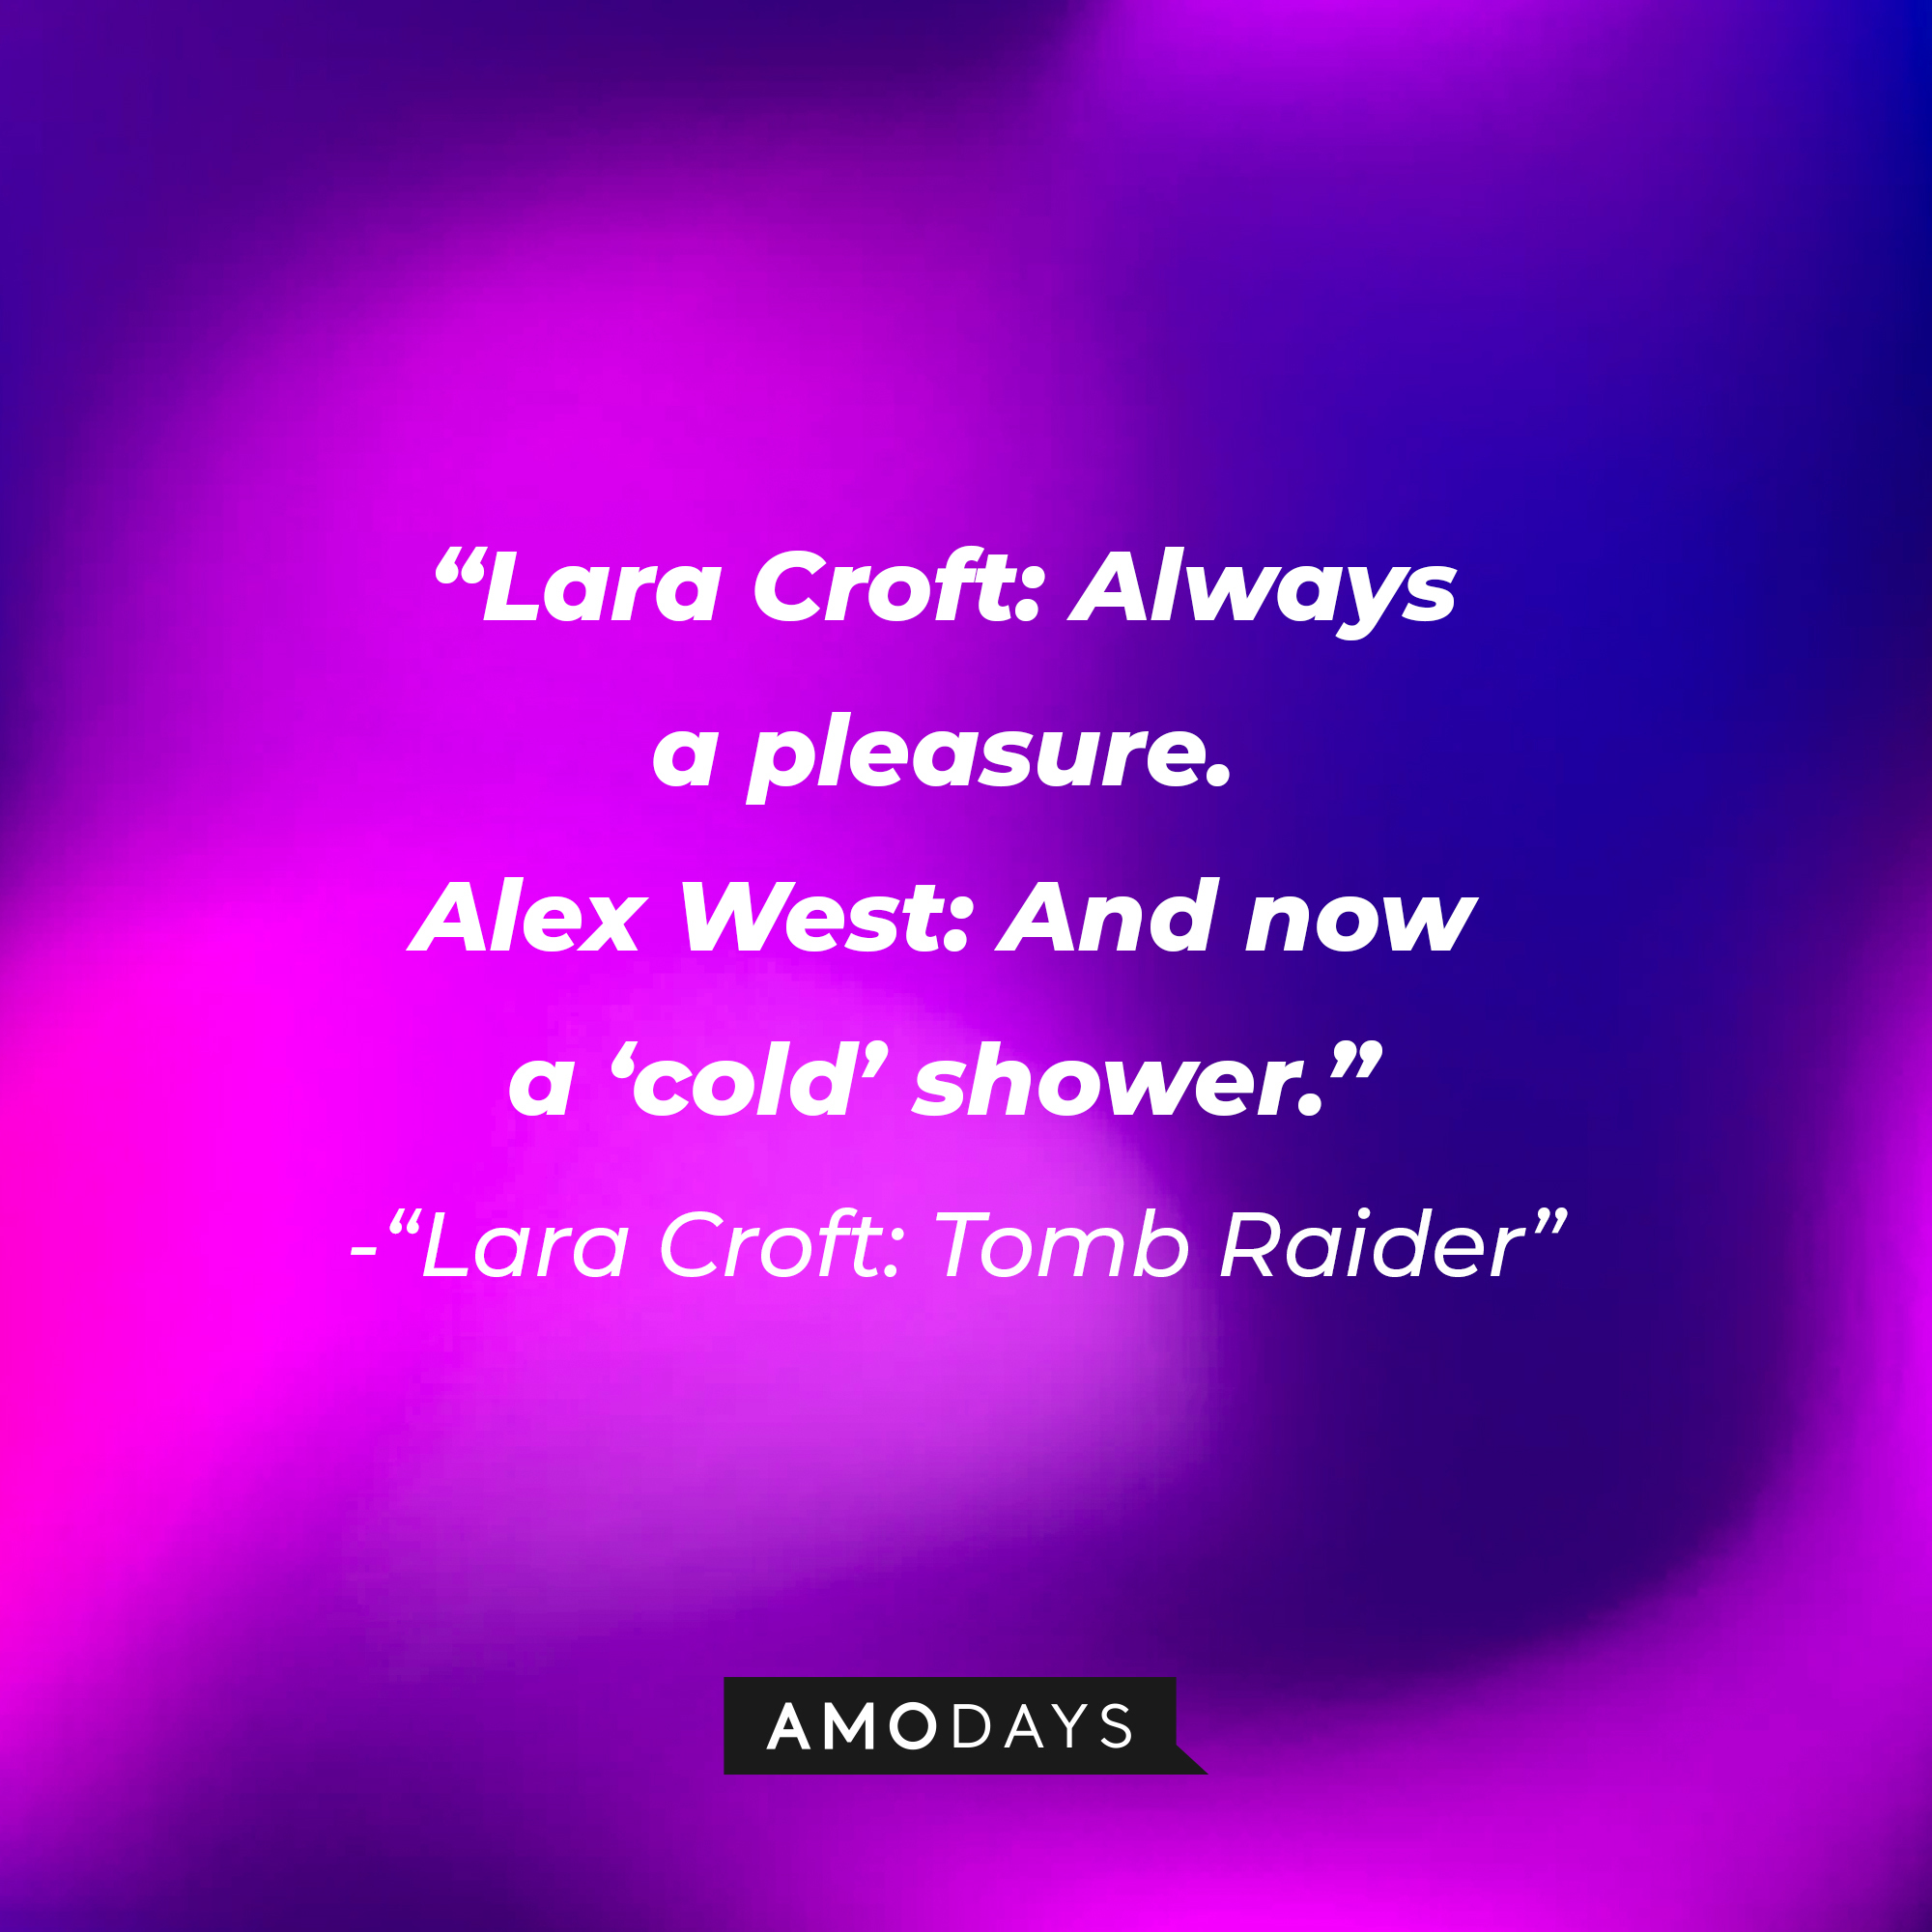 Lara Croft's "Lara Croft: Tomb Raider" quote: "Lara Croft: Always a pleasure. / Alex West: And now a 'cold' shower." | Source: AmoDays